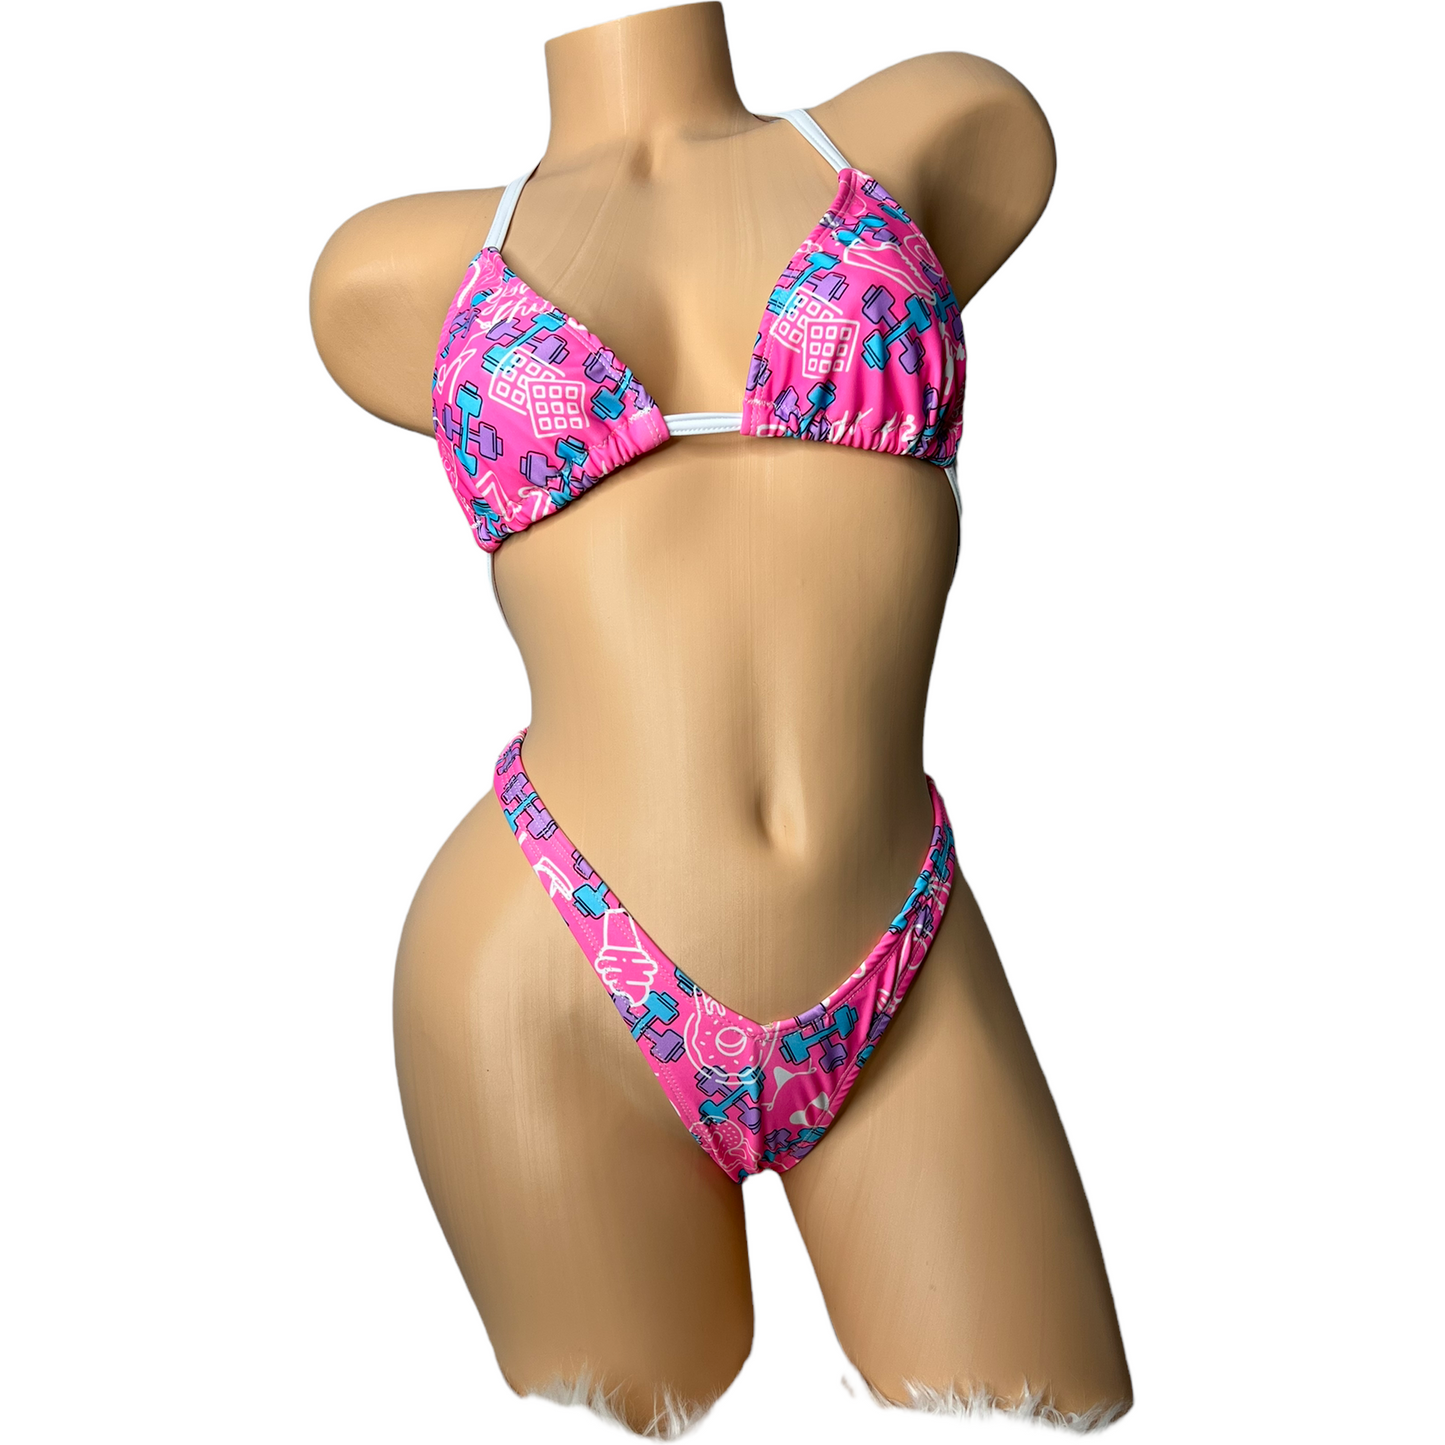 QS - FIGURE - PREPLIFE figure posing bikini